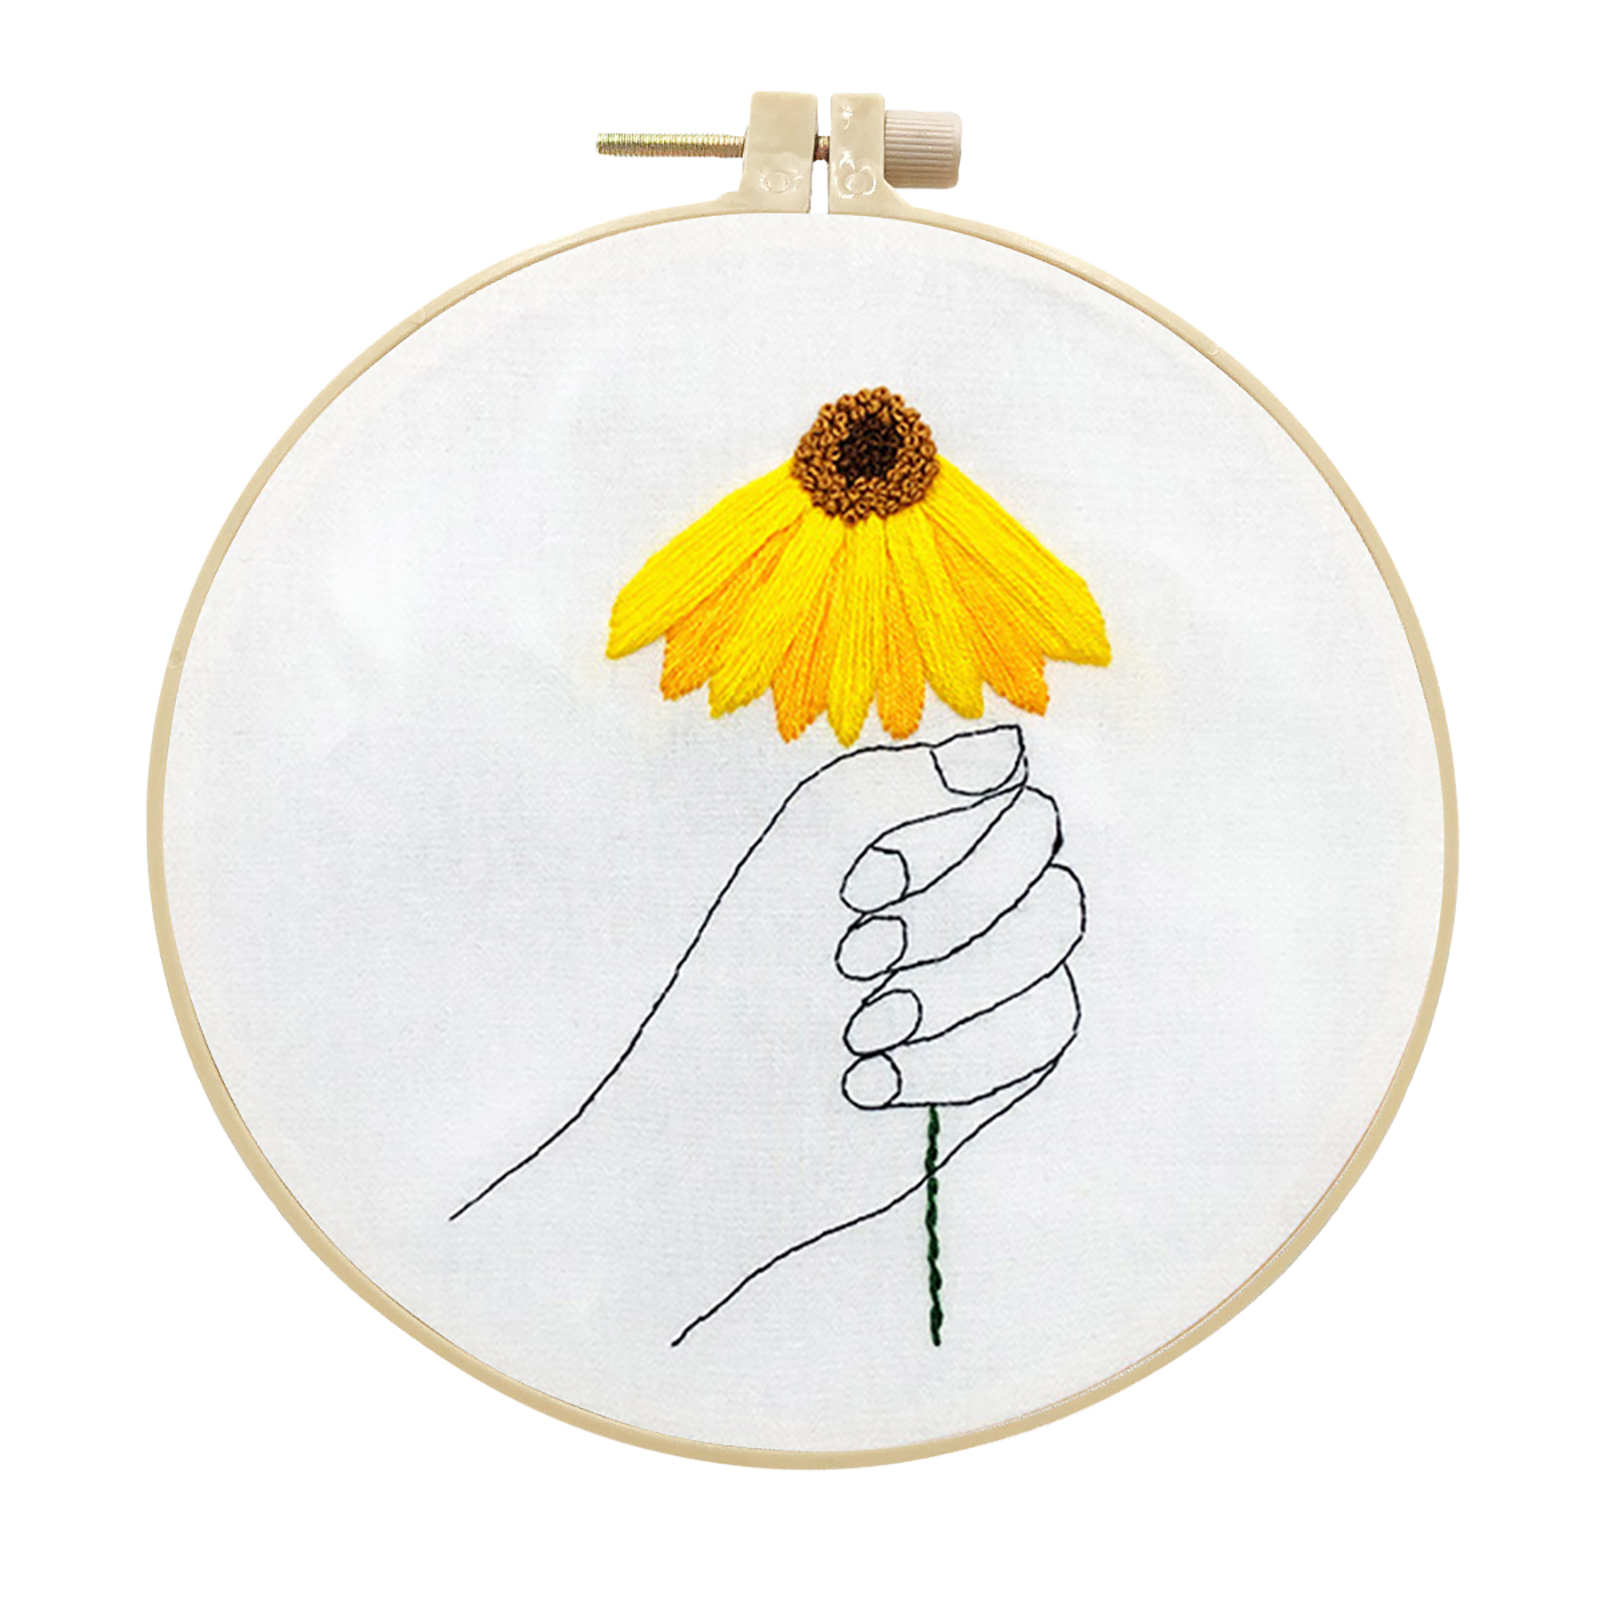 Handmade Embroidery Kit Cross stitch kit for Adult Beginner -  Sunflowers Pattern